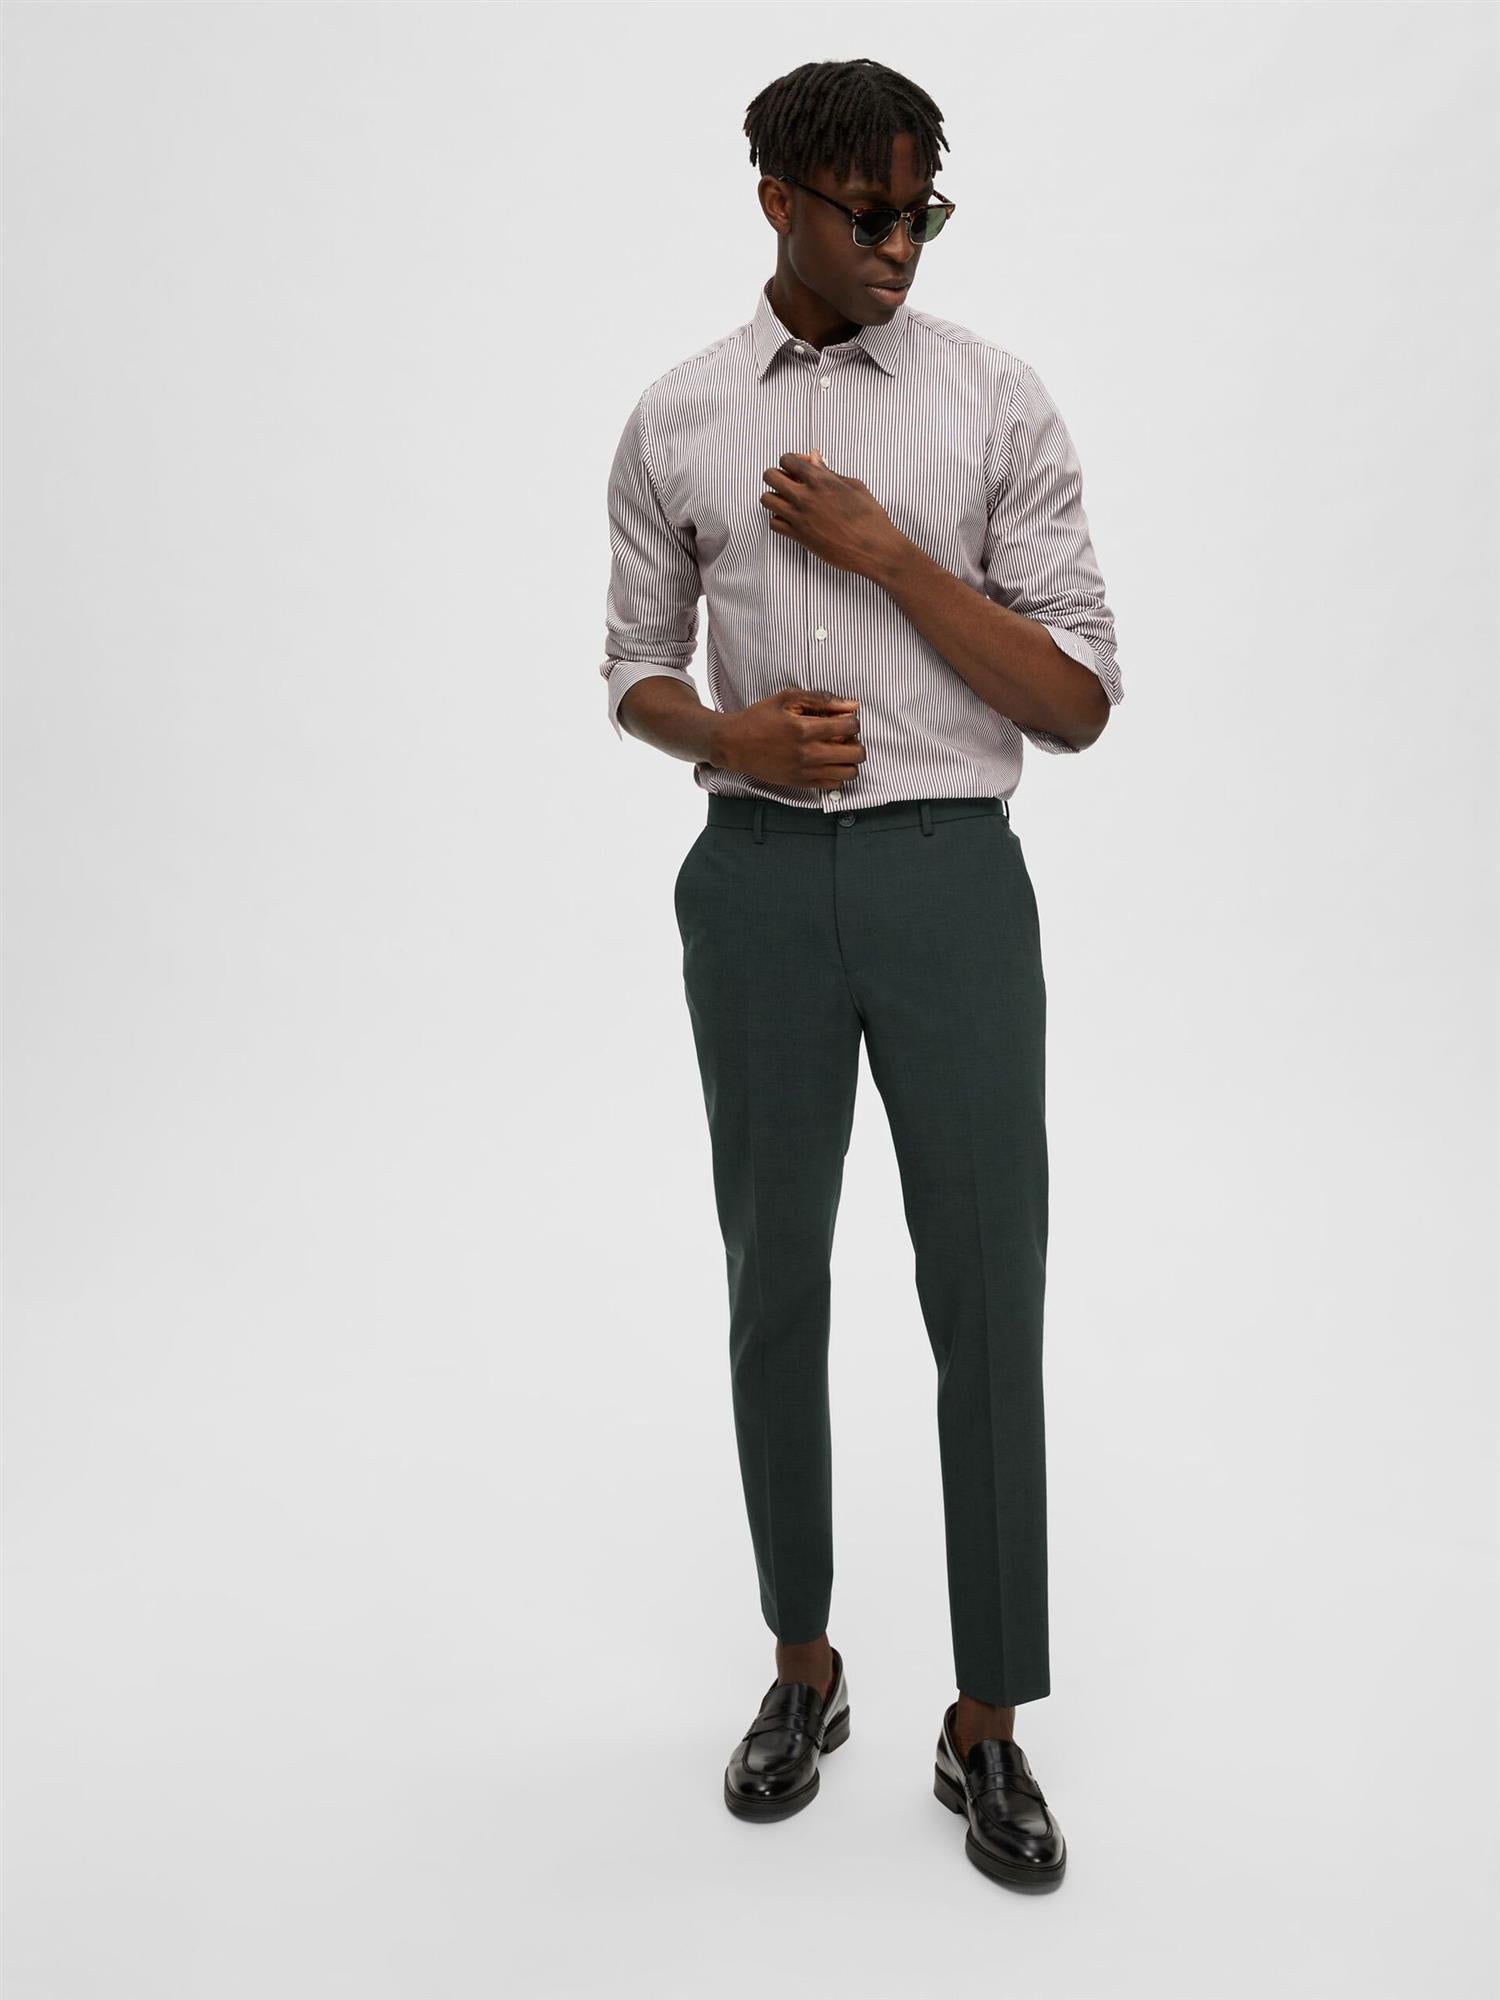 Slim elon dark green trouser